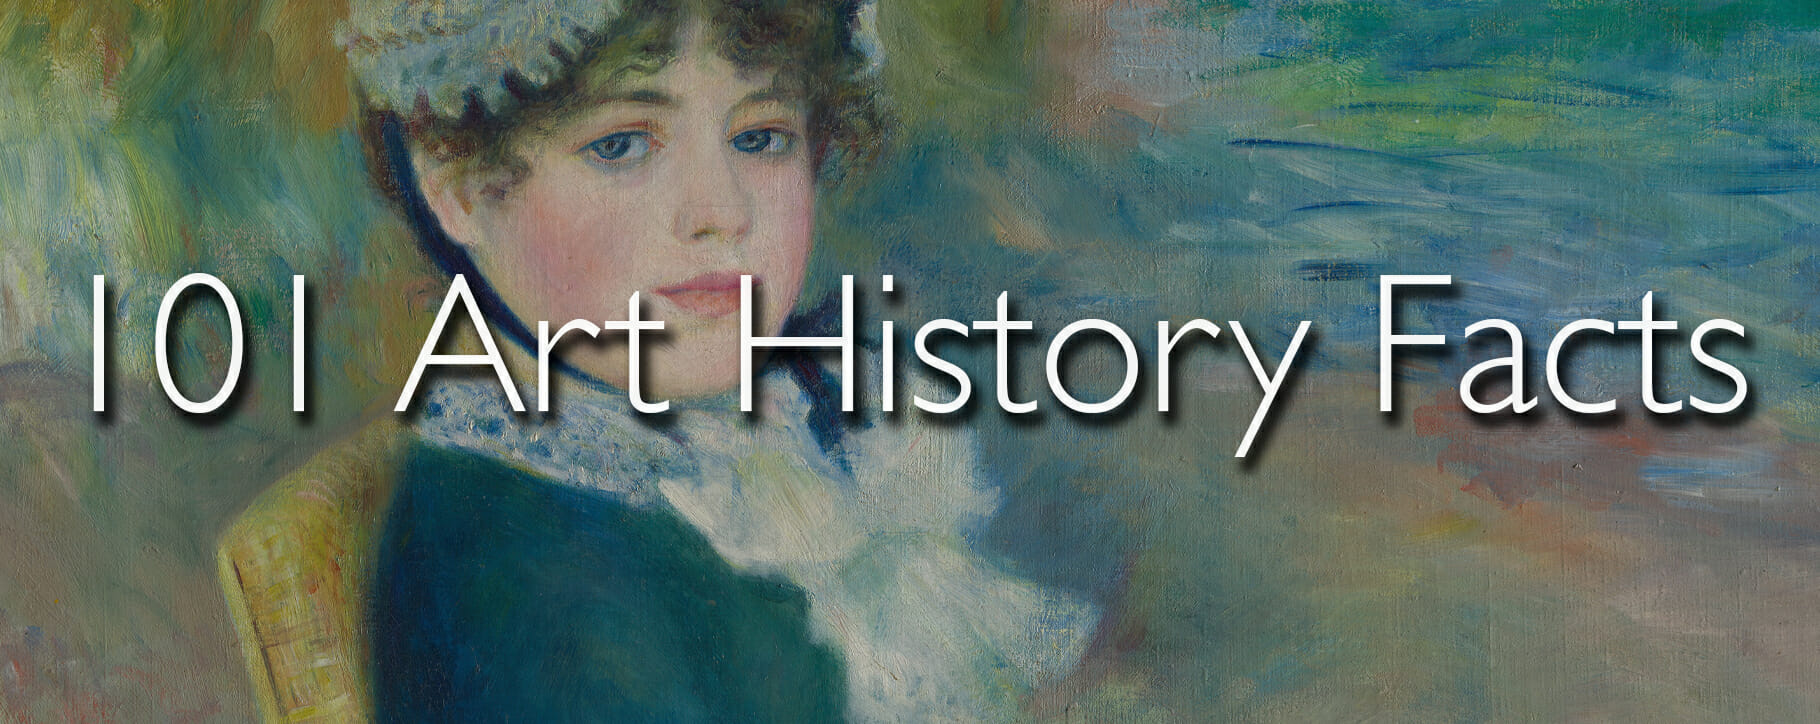 101 art history facts